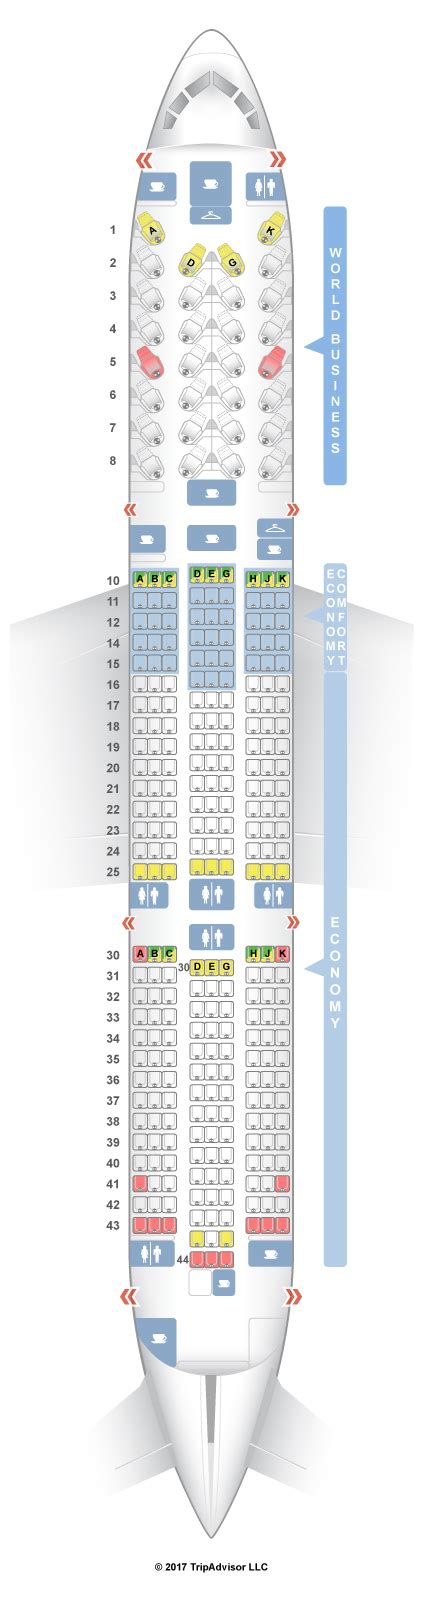 Seatguru Seat Map Klm Boeing 787 9 789